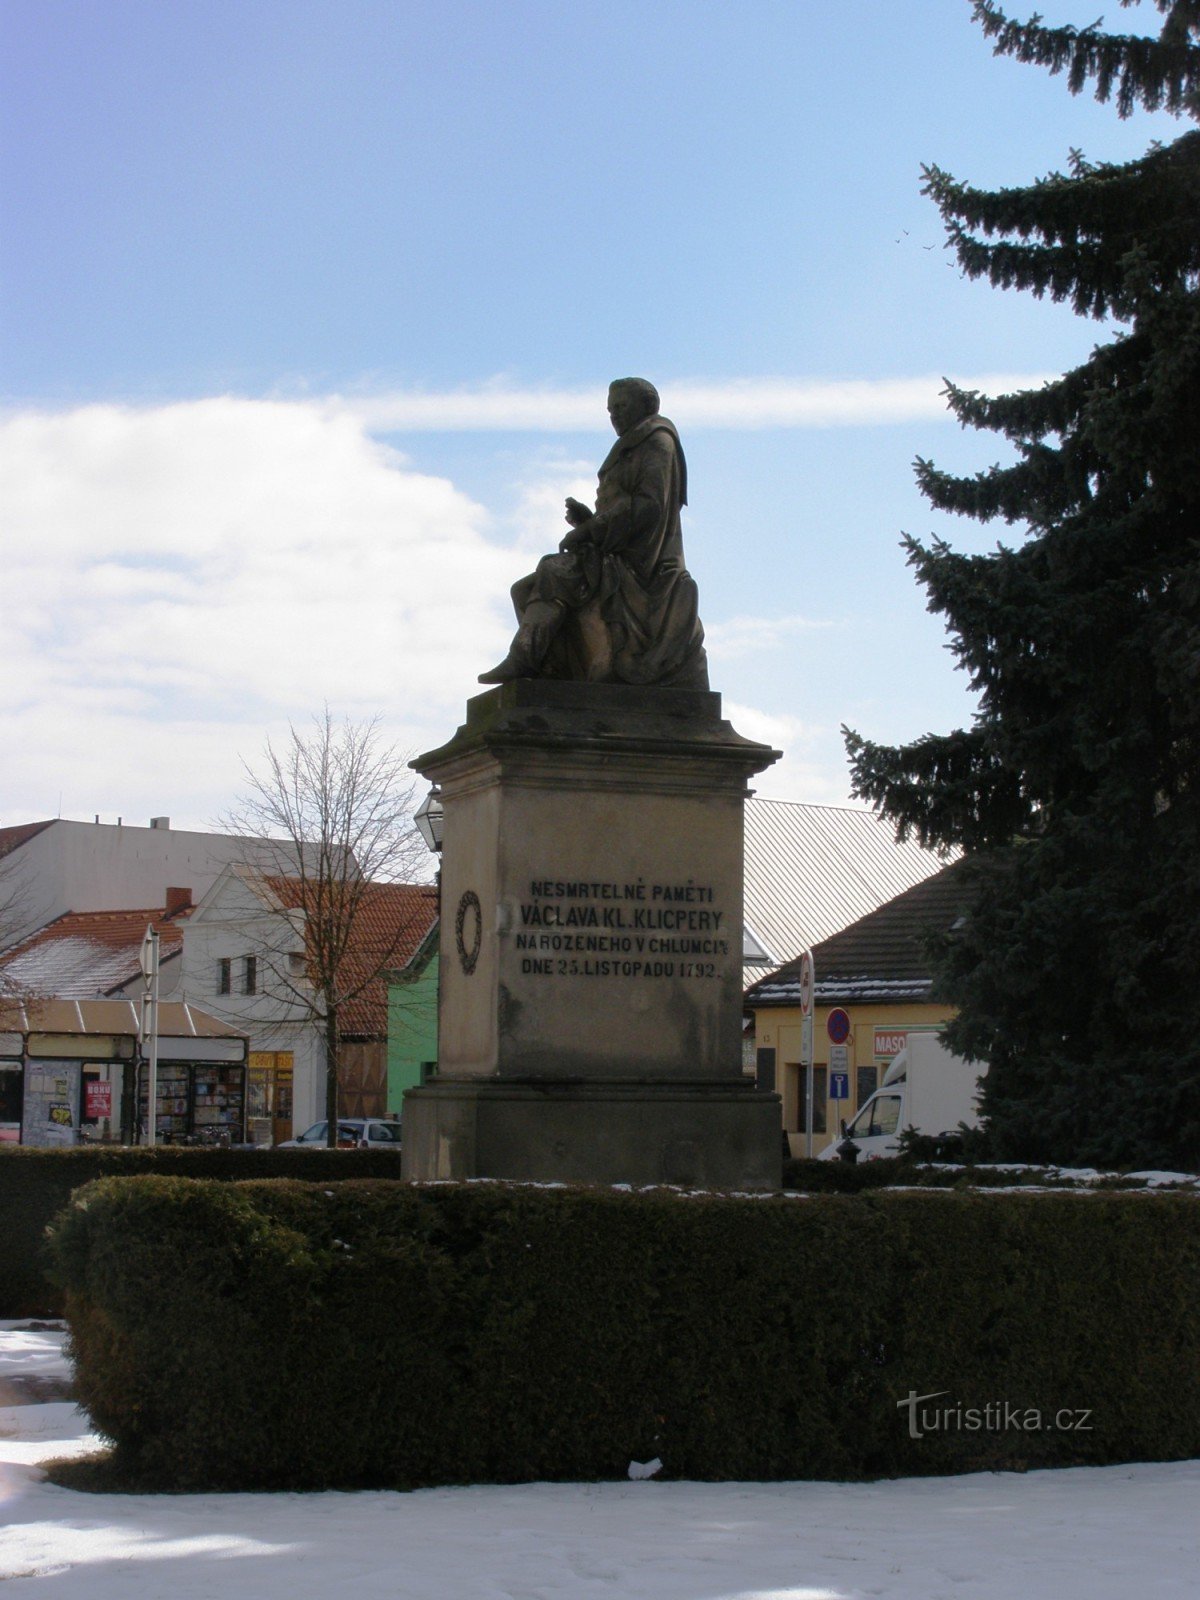 Chlumec nad Cidlinou - monument à Václav Kliment Klicpera